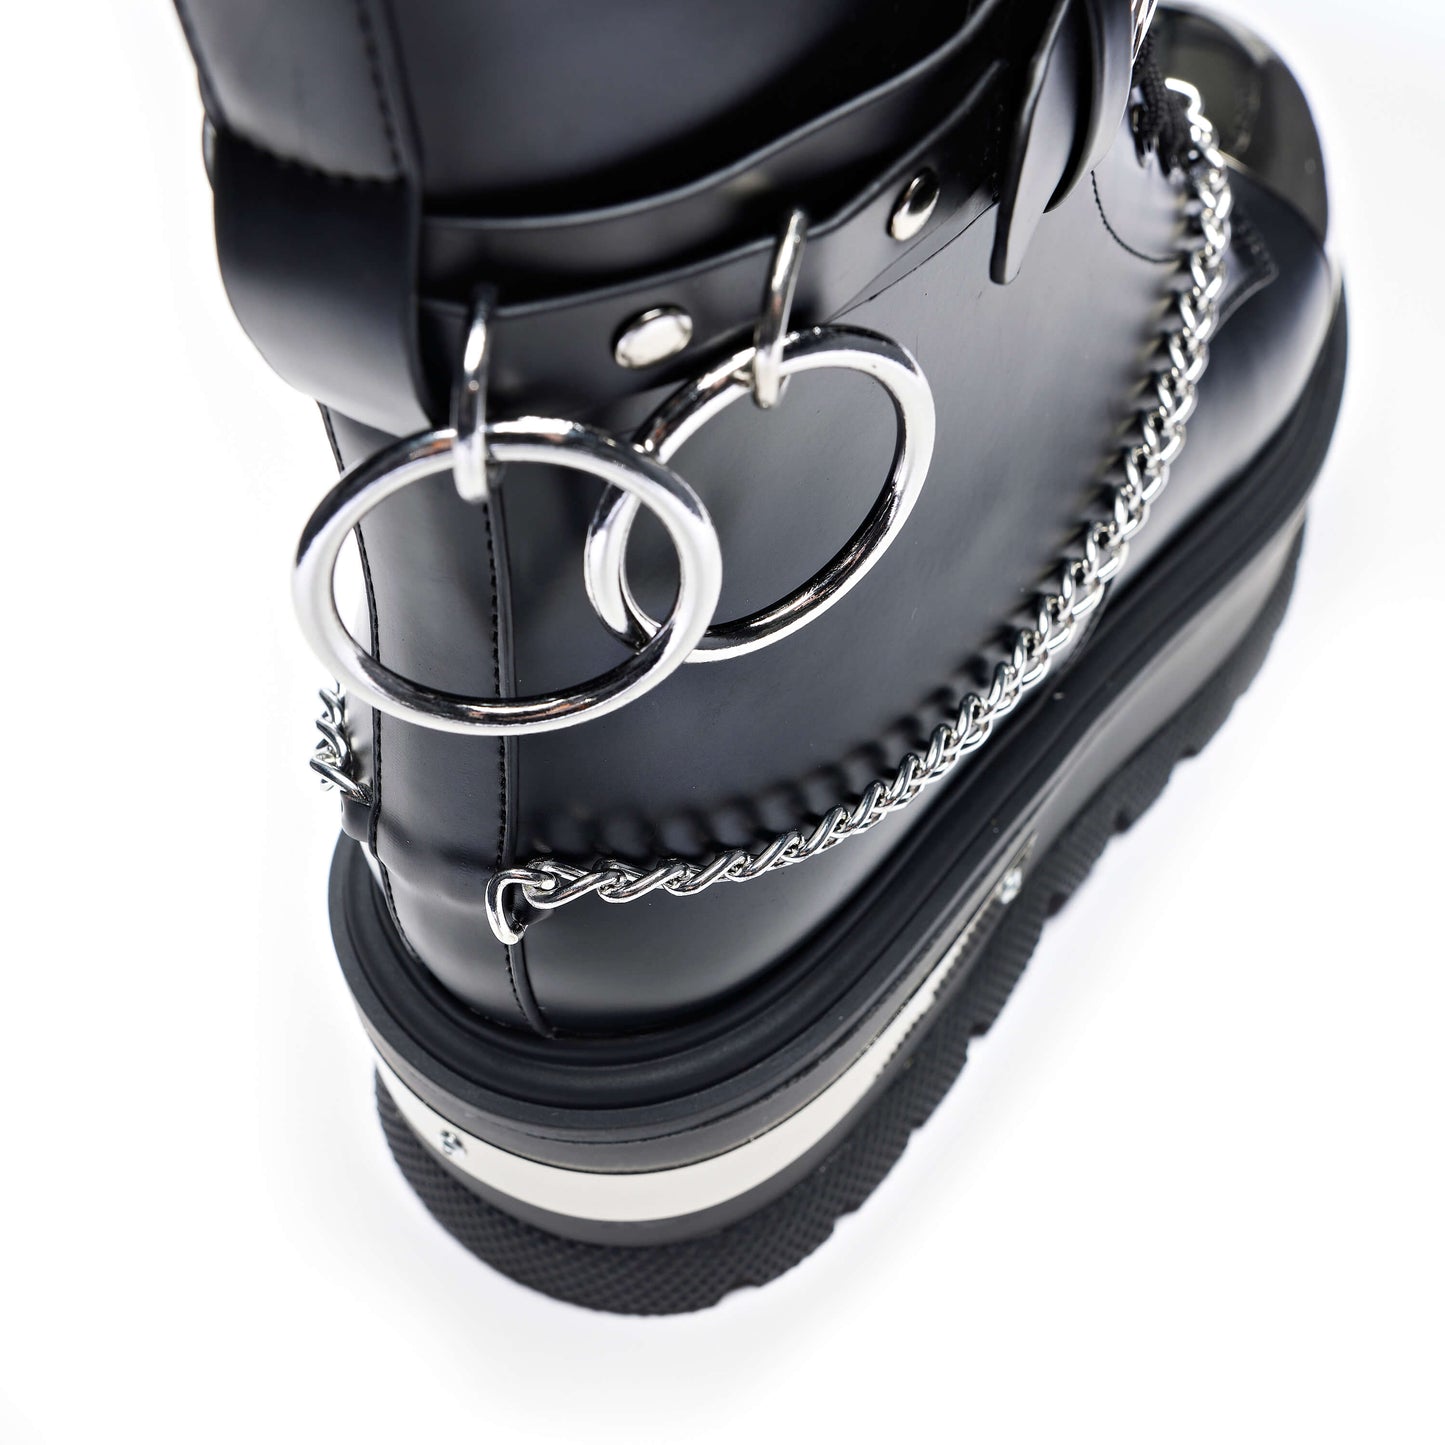 Borin Hardware Platform Boots - Ankle Boots - KOI Footwear - Black - Back Detail